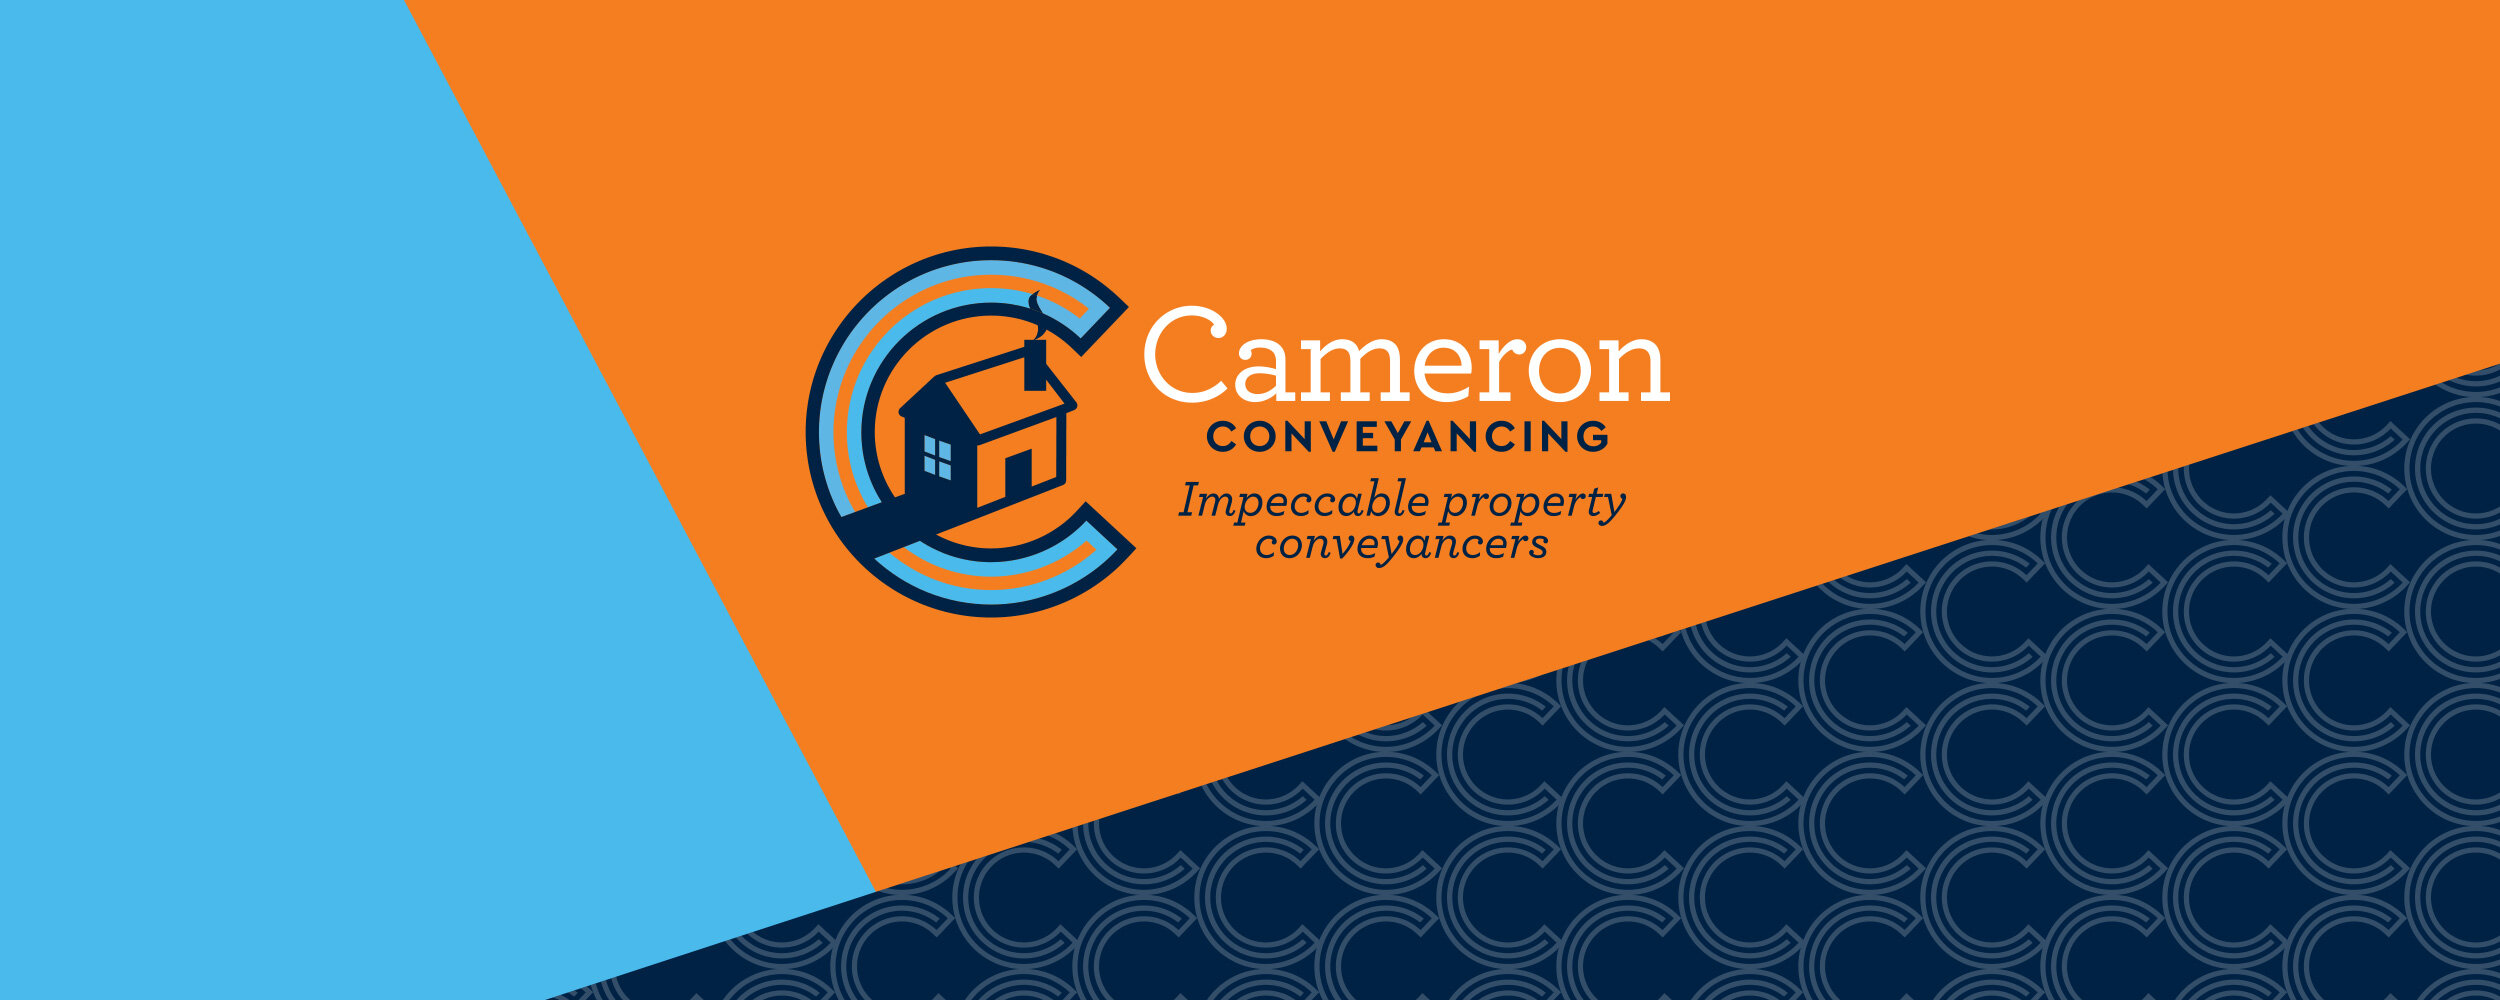 Cameron-Conveyancing-Sider-image-7.jpg